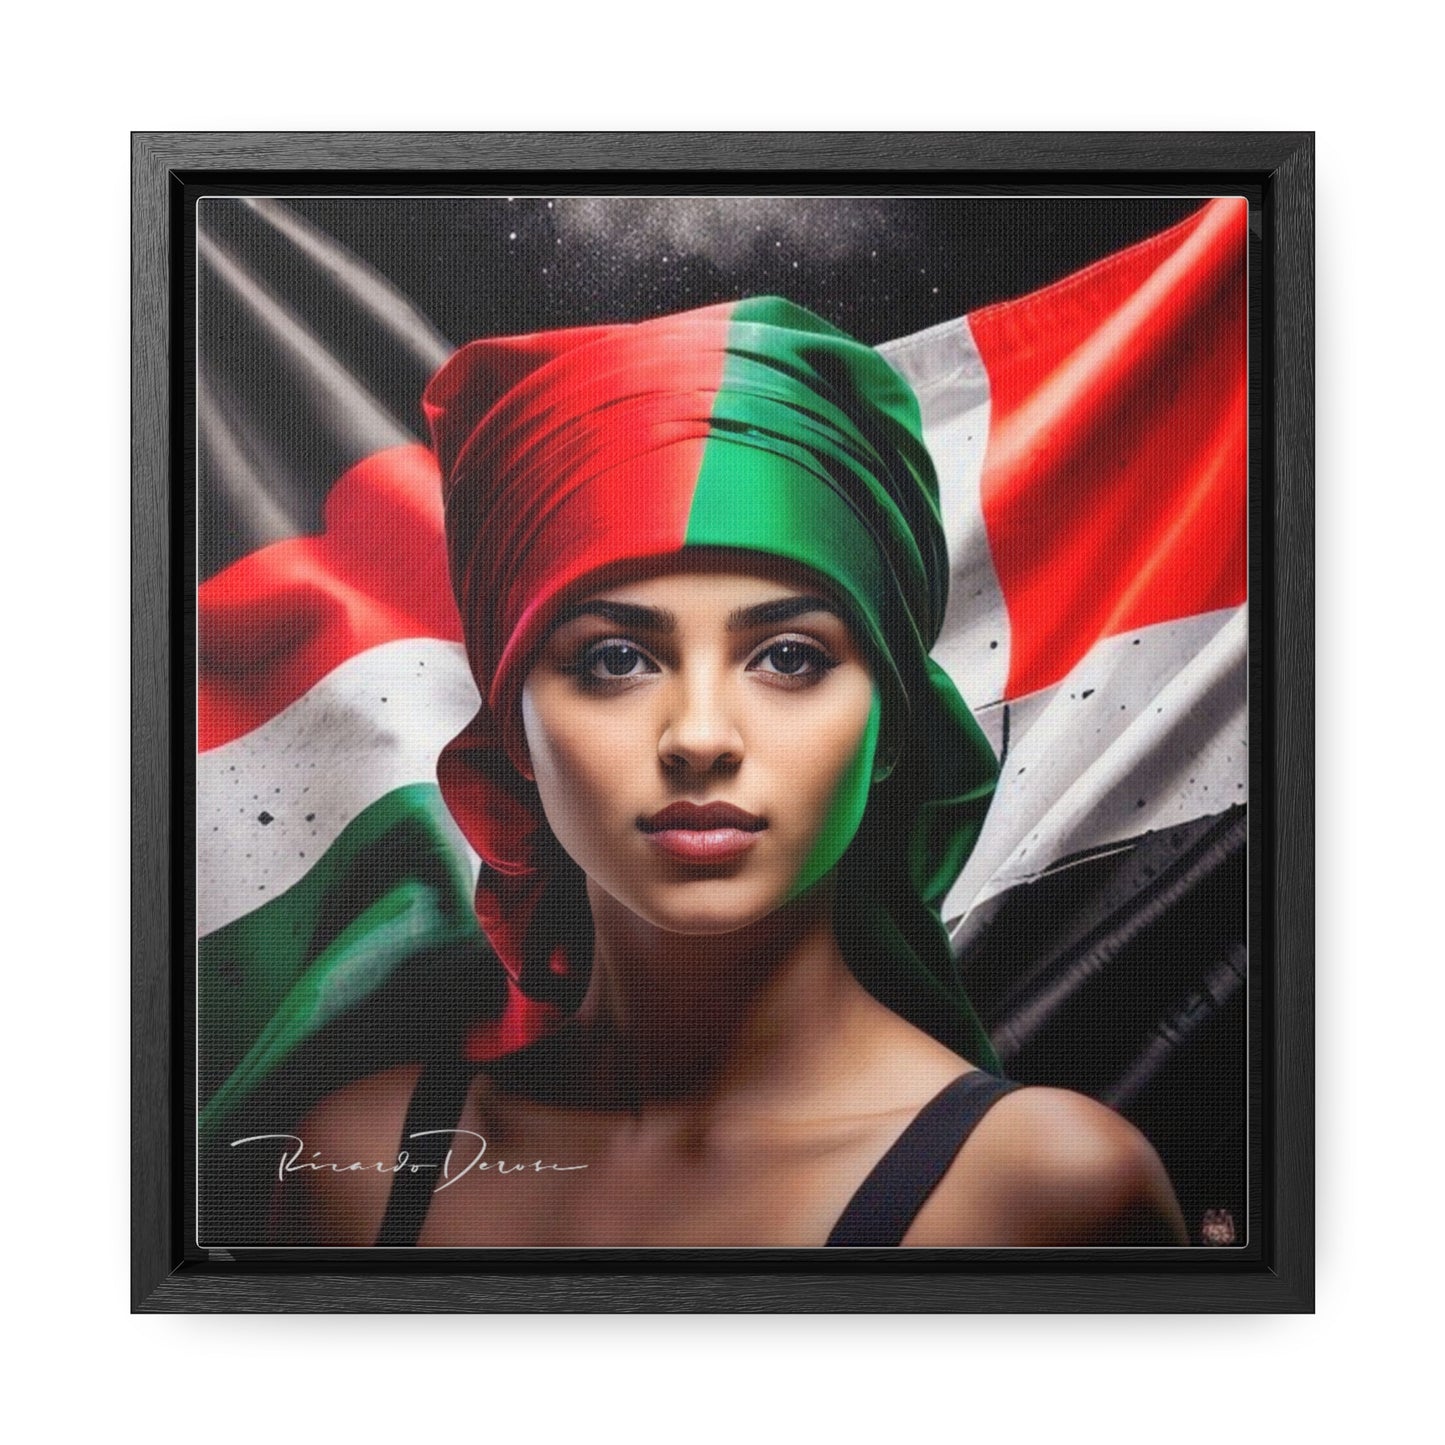 Free Palestine Gallery Canvas Wraps, Square Frame - Derose Entertainment 